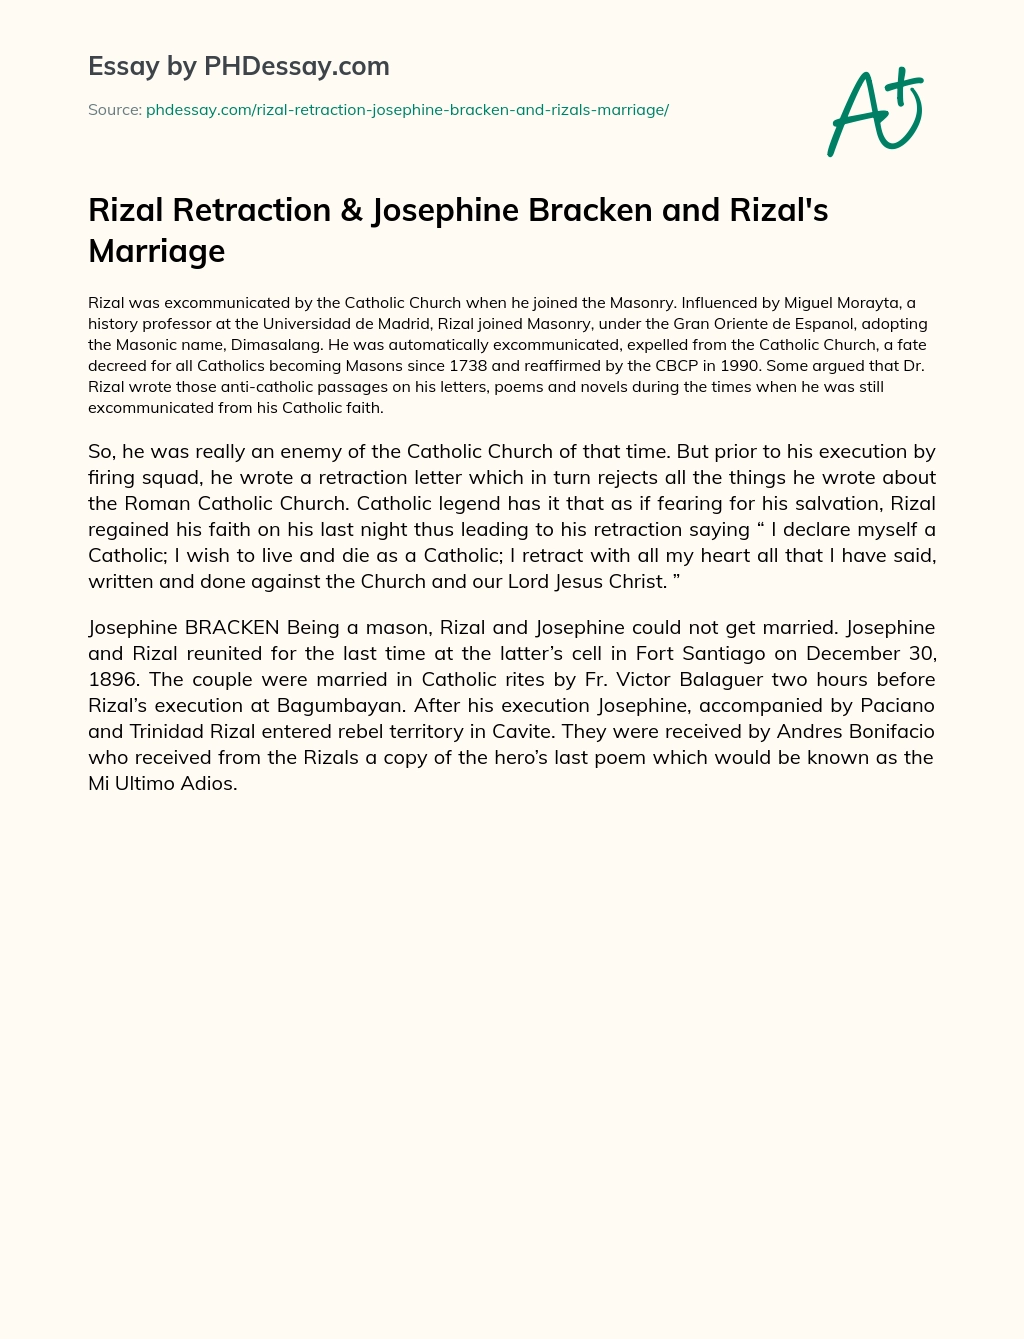 Rizal Retraction & Josephine Bracken and Rizal’s Marriage essay